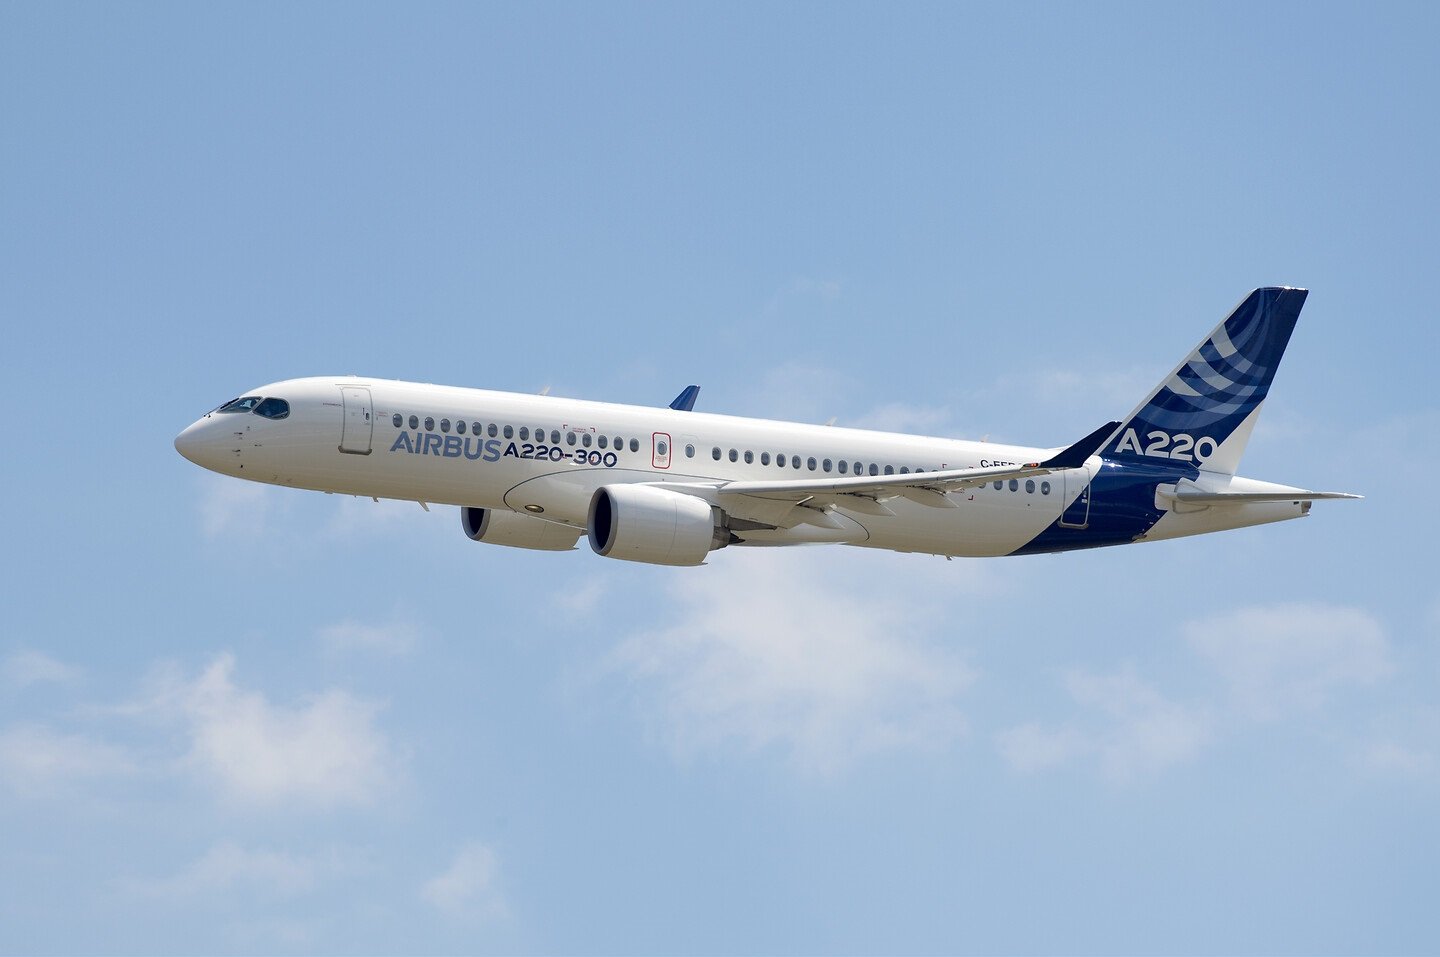 Aviation Capital Group encomenda 20 novos jatos Airbus